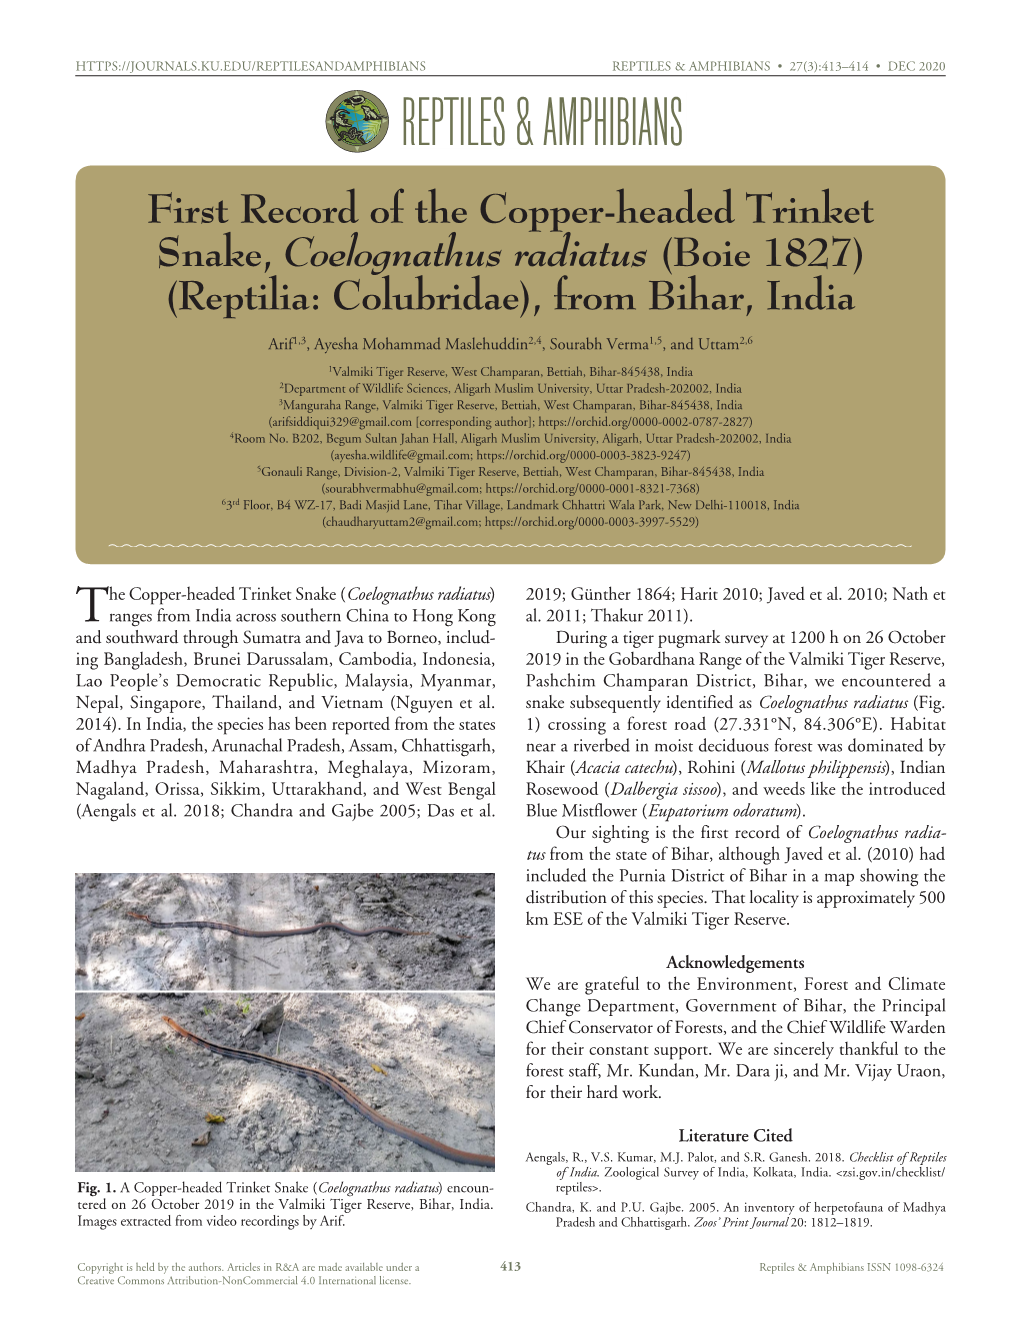 Coelognathus Radiatus) 2019; Günther 1864; Harit 2010; Javed Et Al